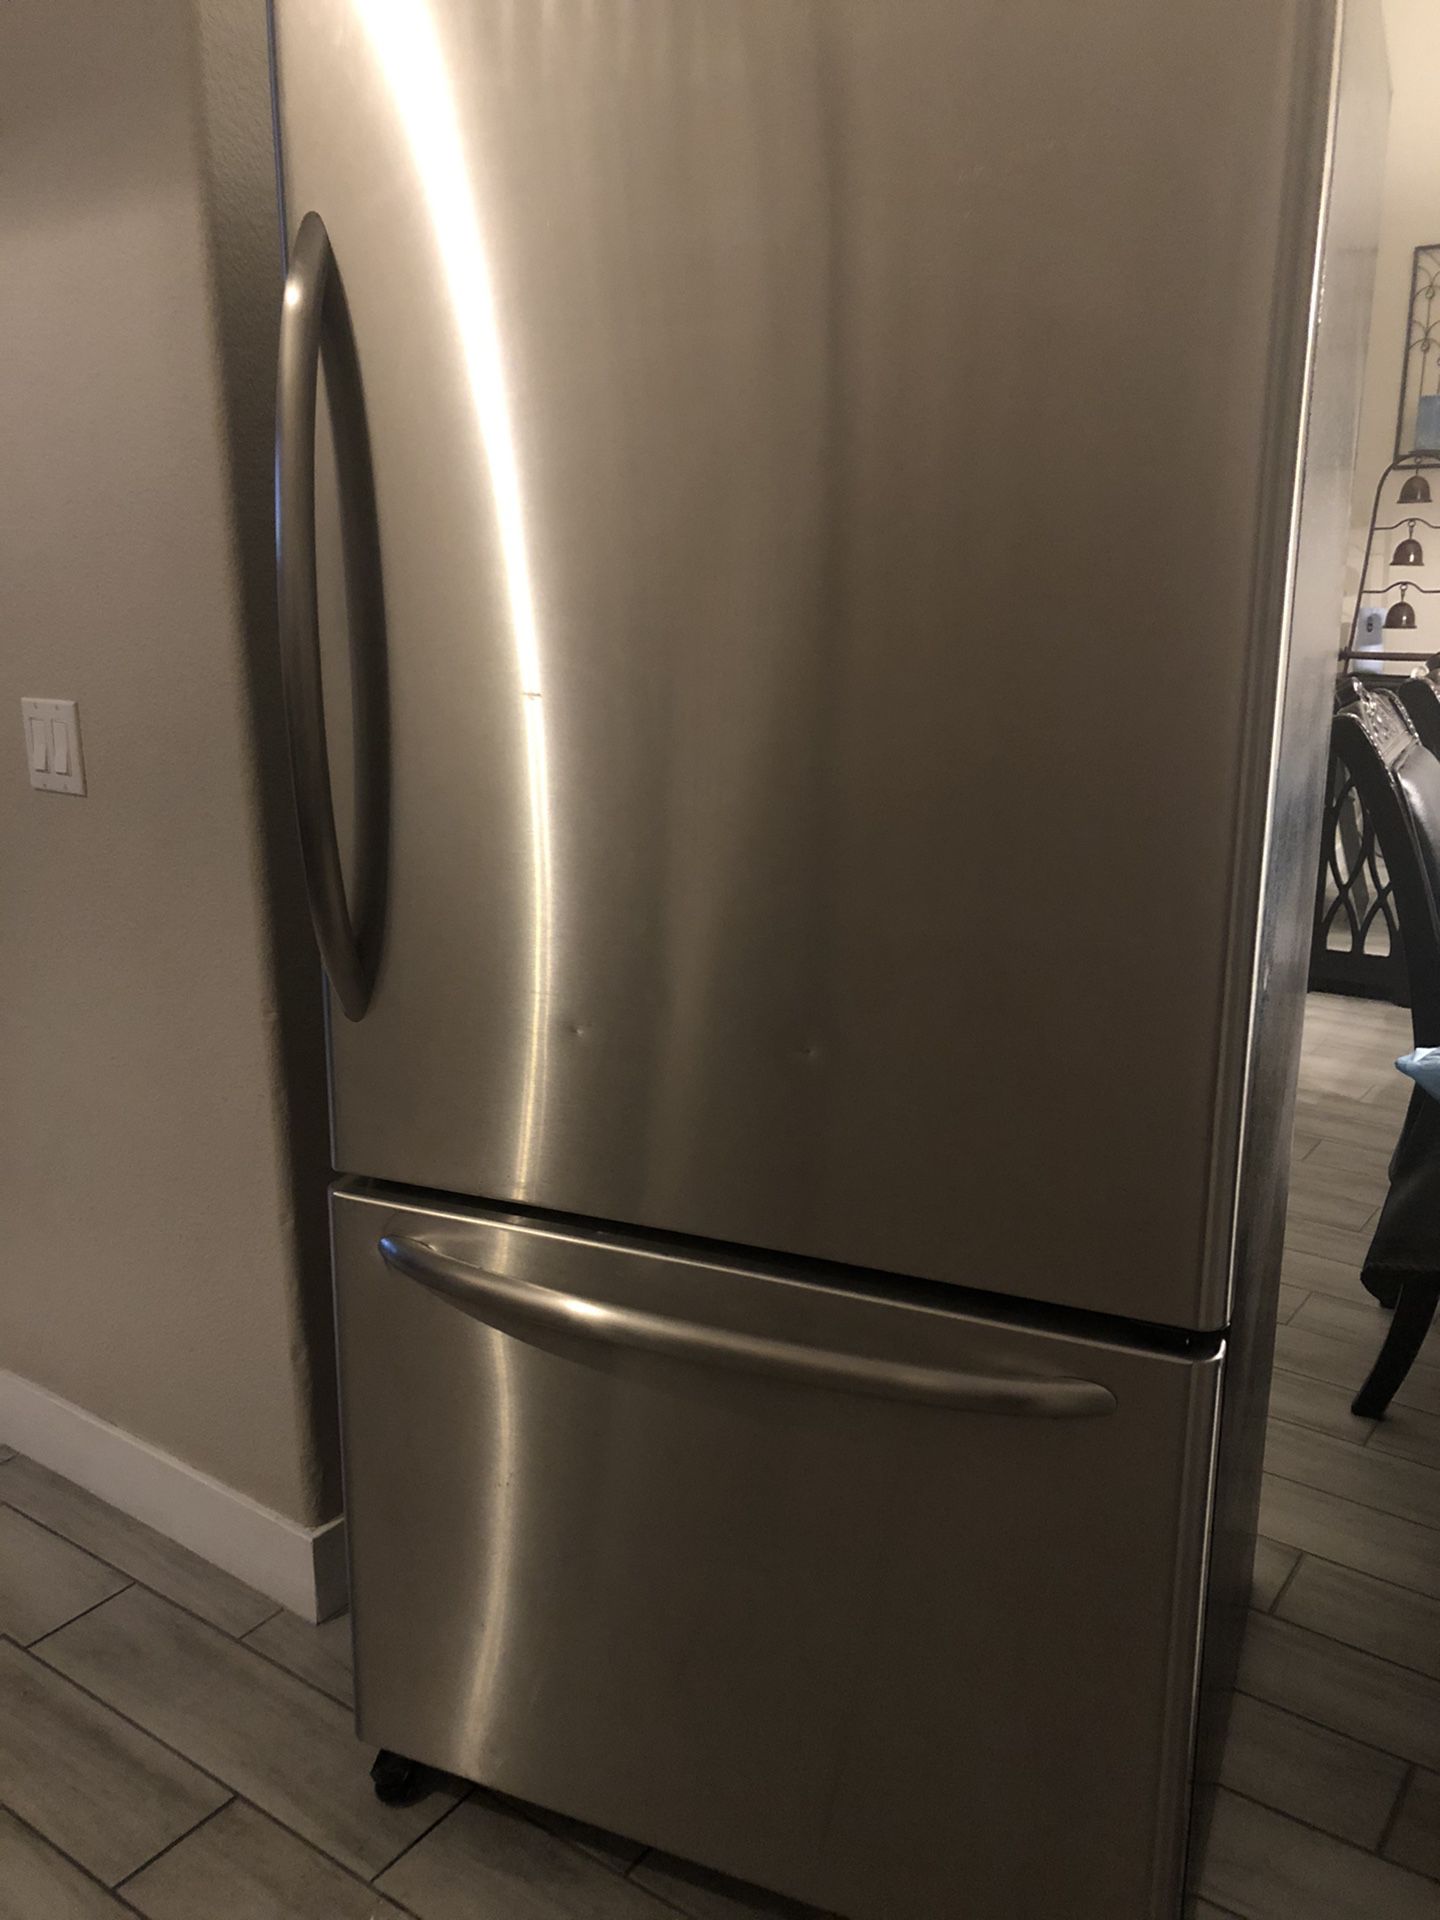 Refrigerator- stainless steel